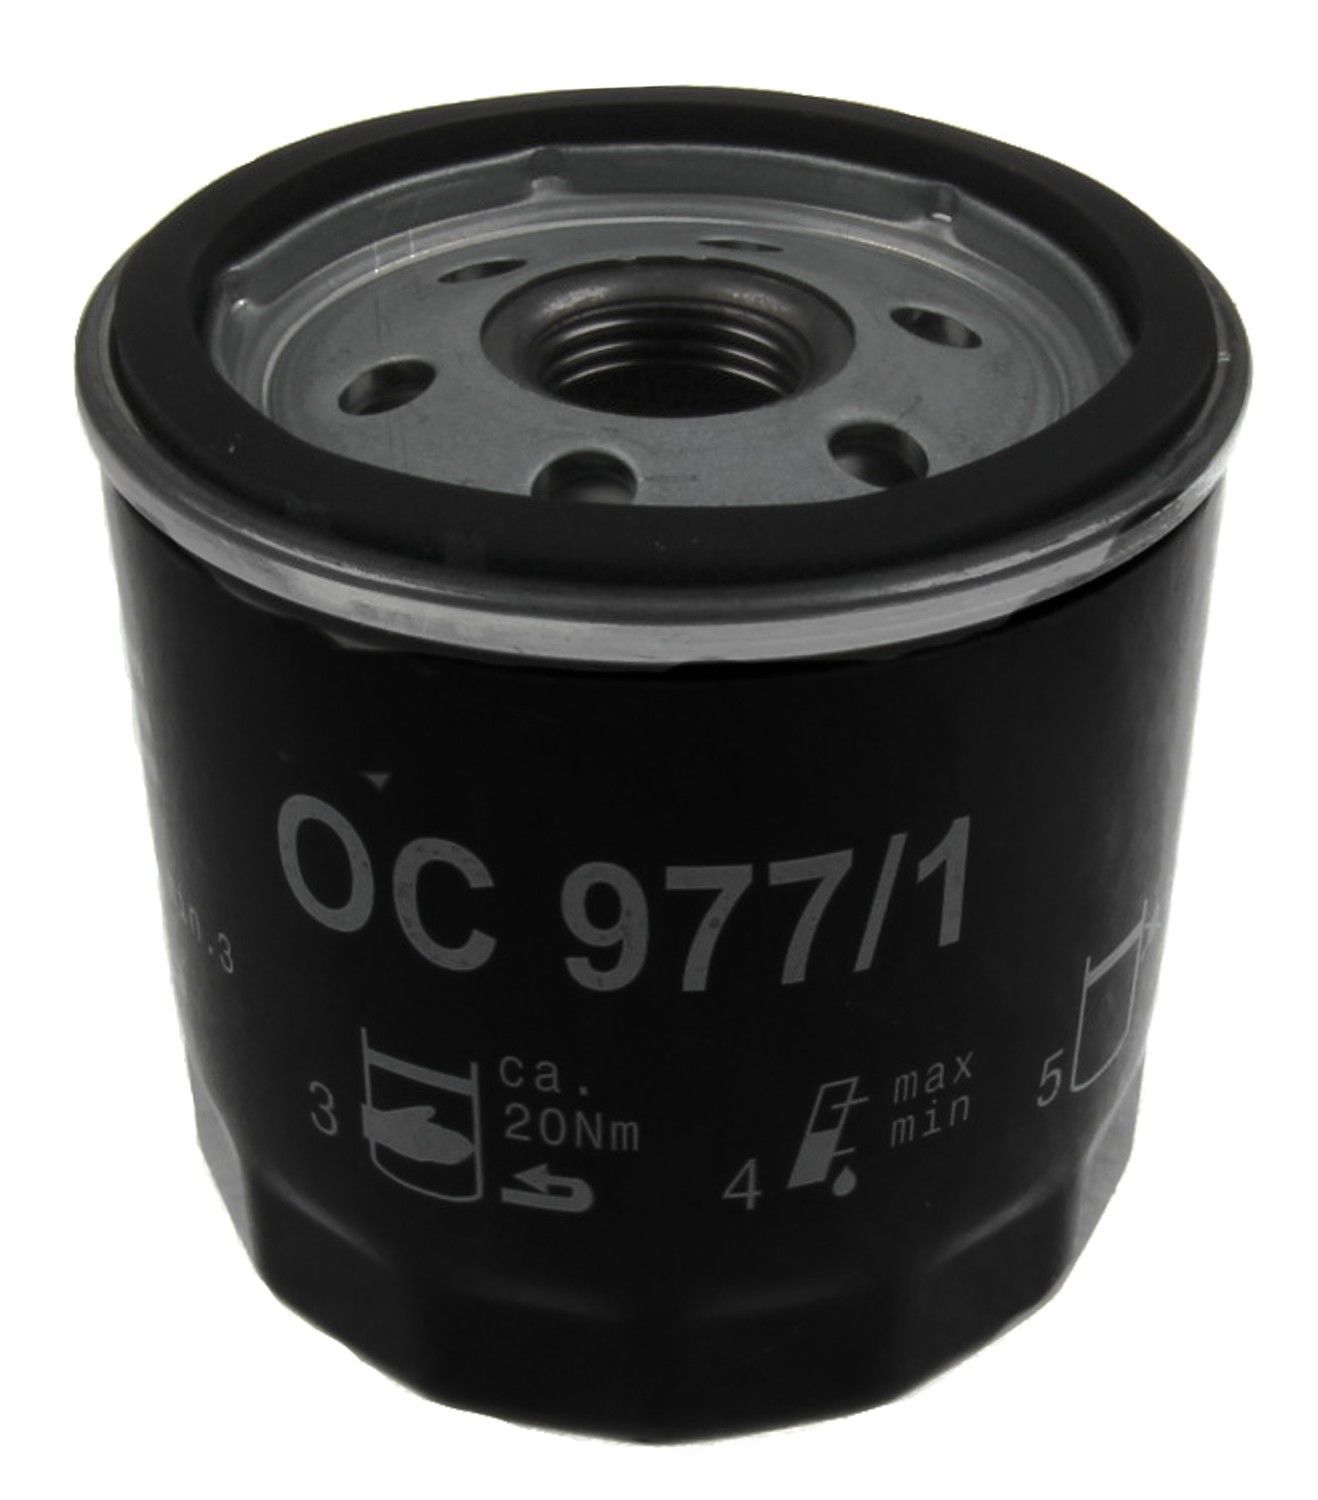 MAHLE ORIGINAL - Engine Oil Filter - MHL OC 977/1